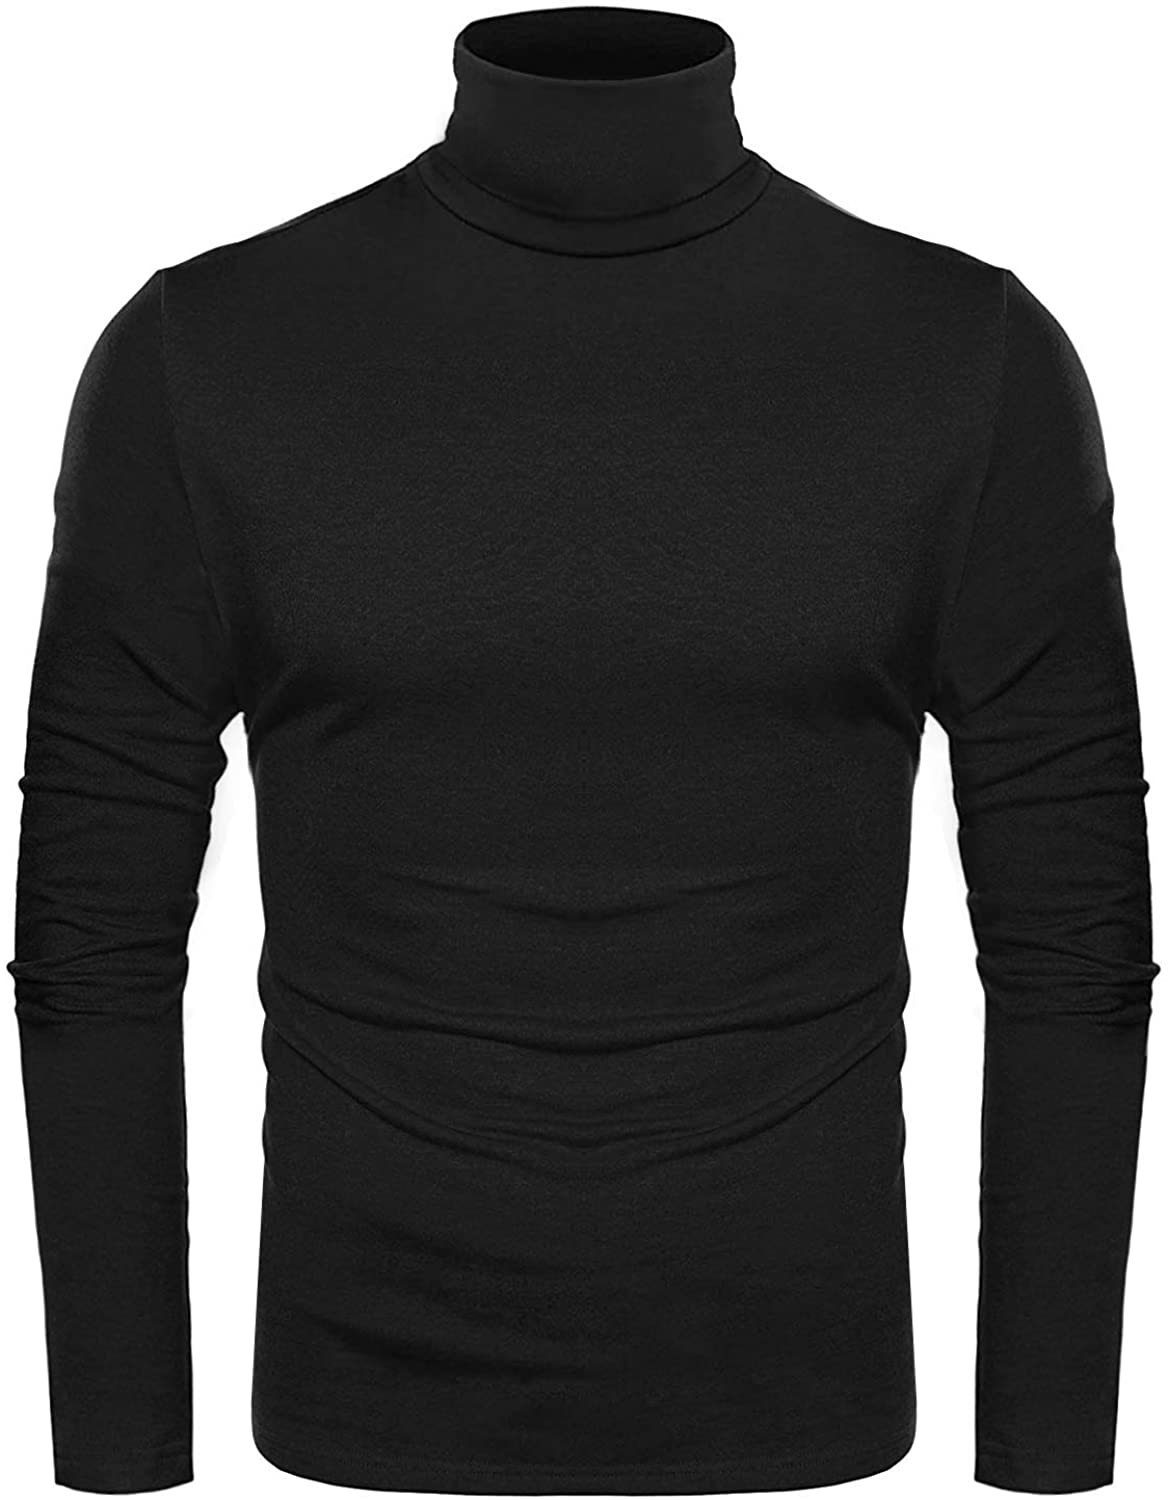 Download ZEGOLO Mens Thermal Mock Turtleneck Long Sleeve T Shirt ...